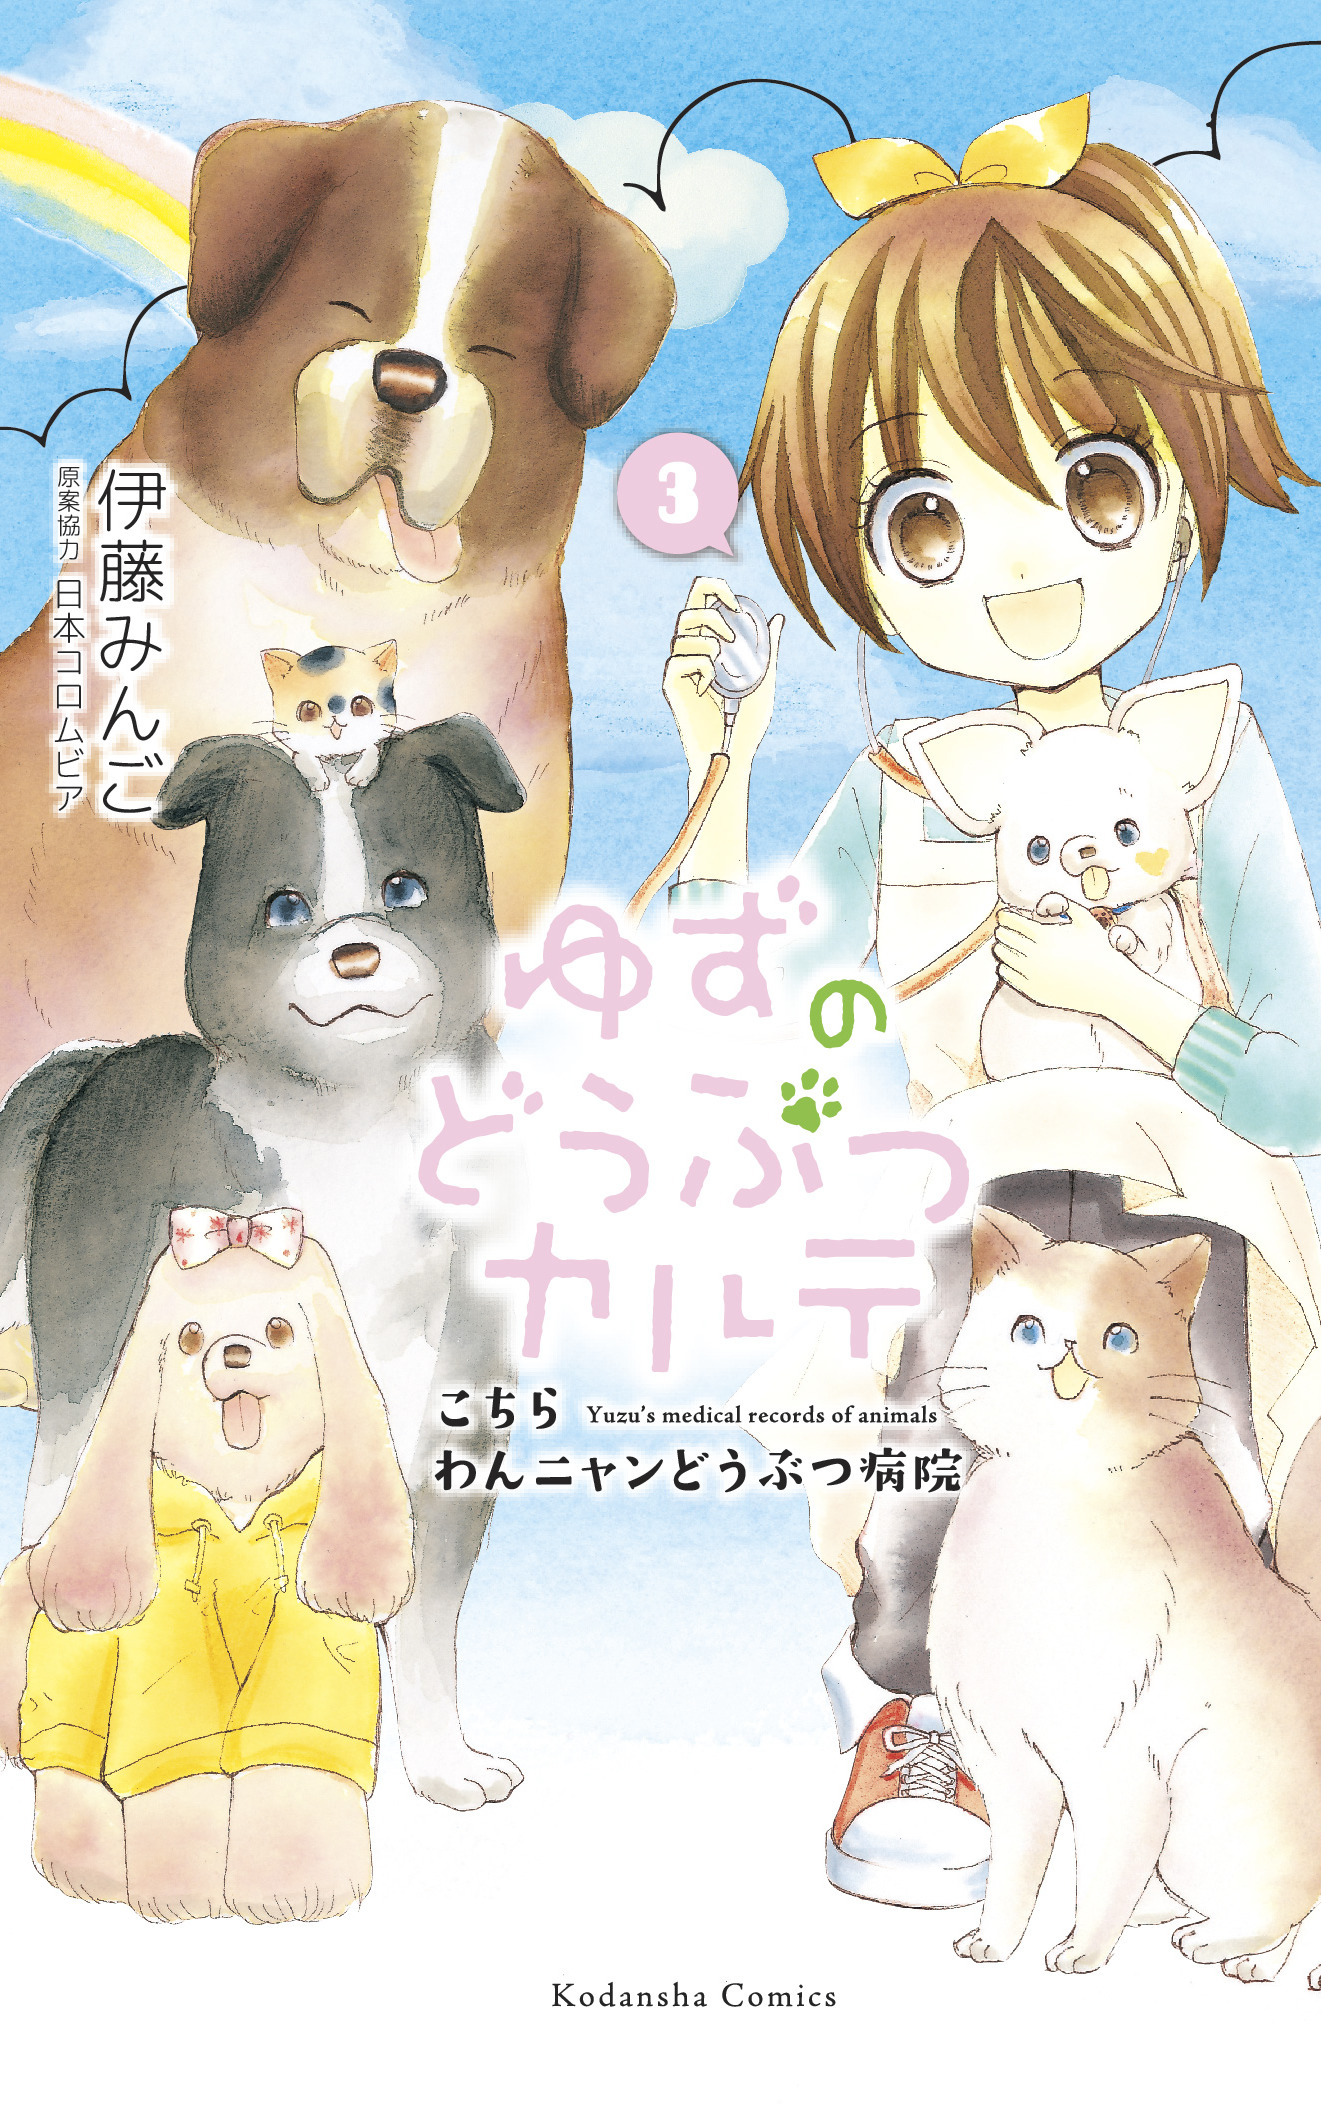 Yuzu Pet Vet Manga Volume 3